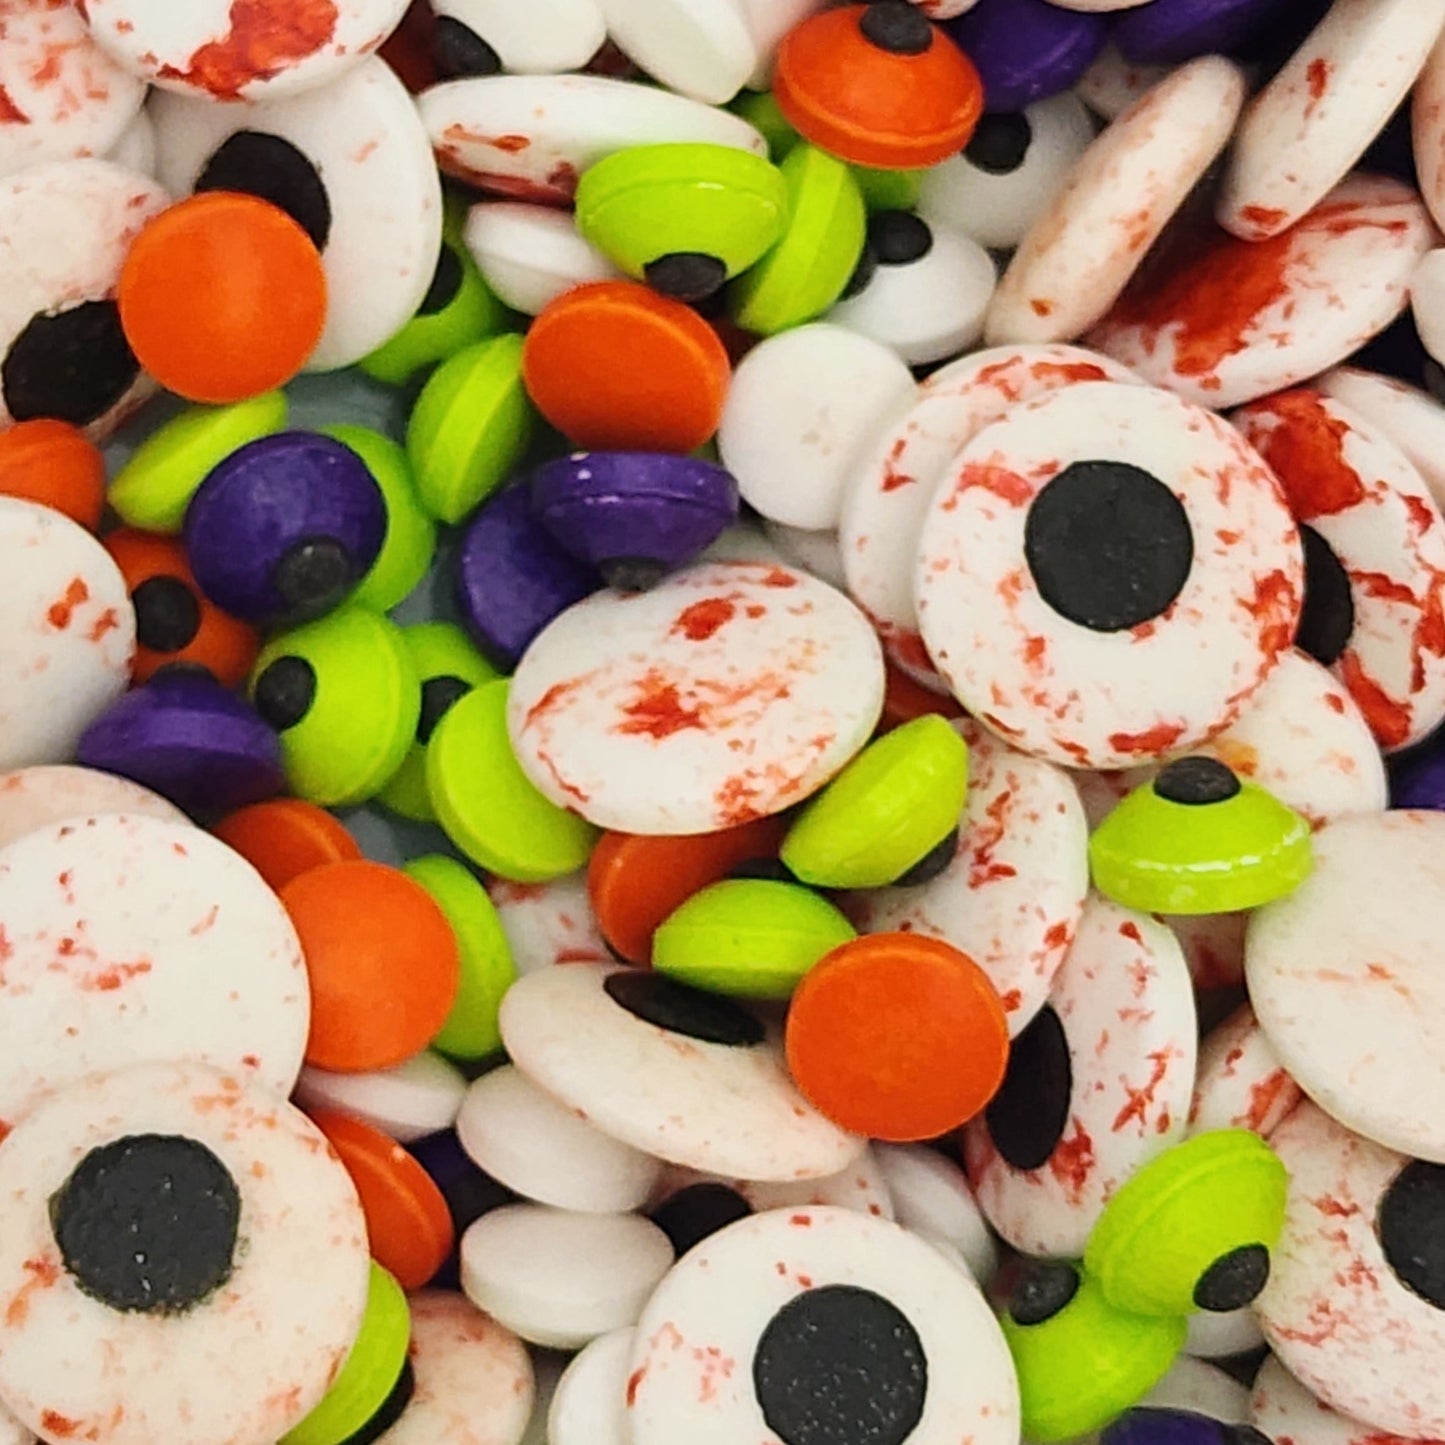 Eyeball candies